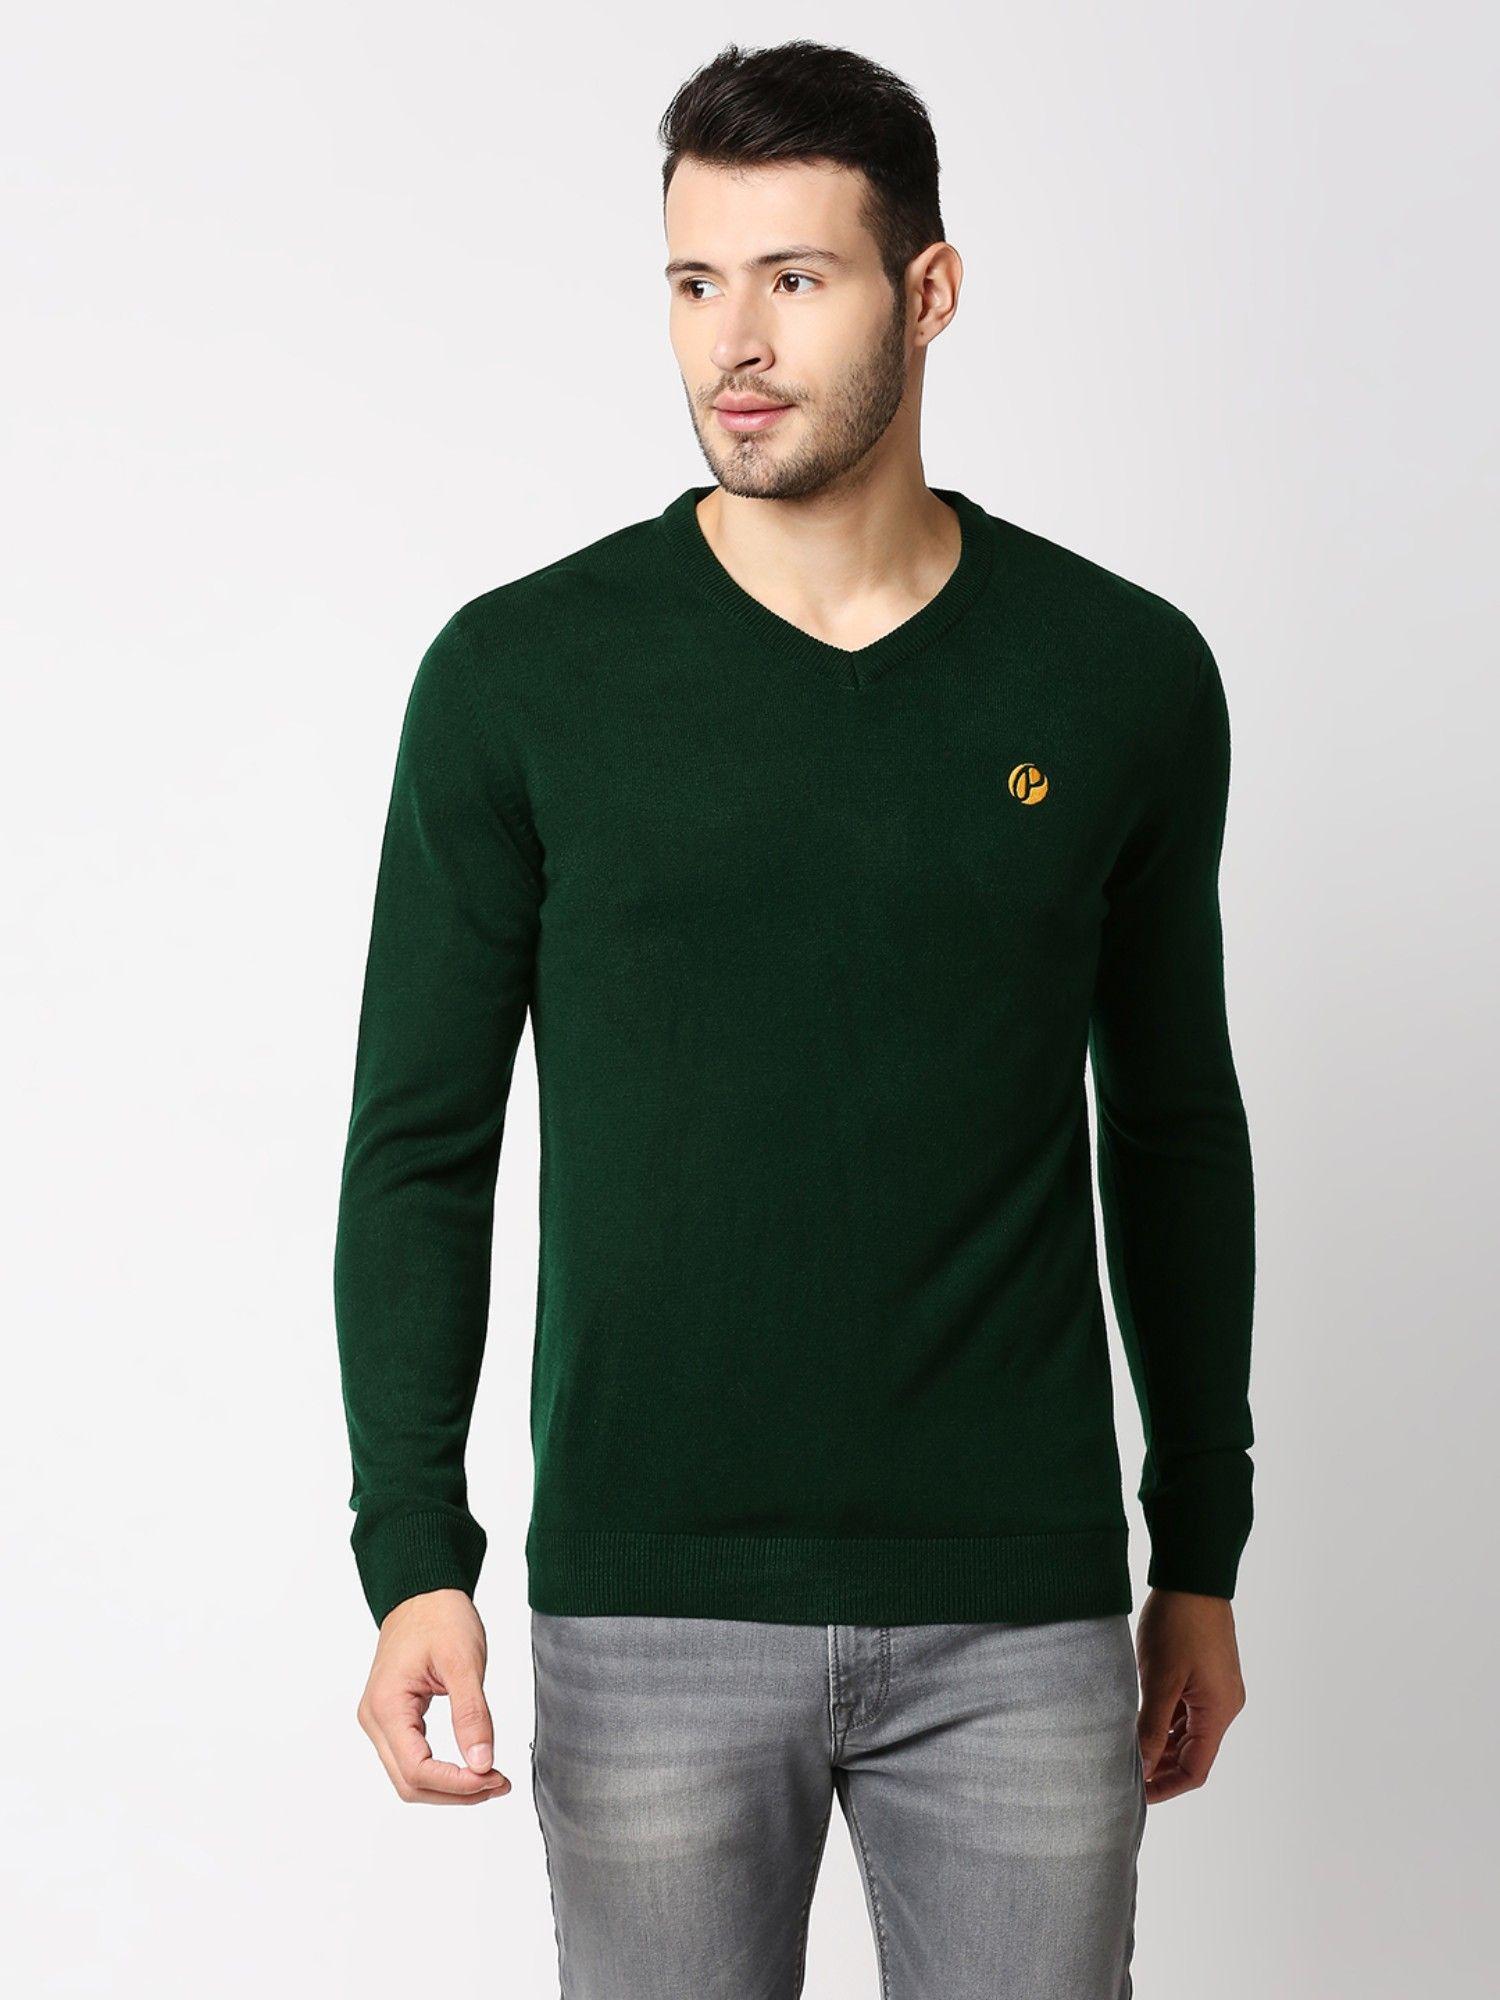 supremo-light-acro-wool-green-sweater